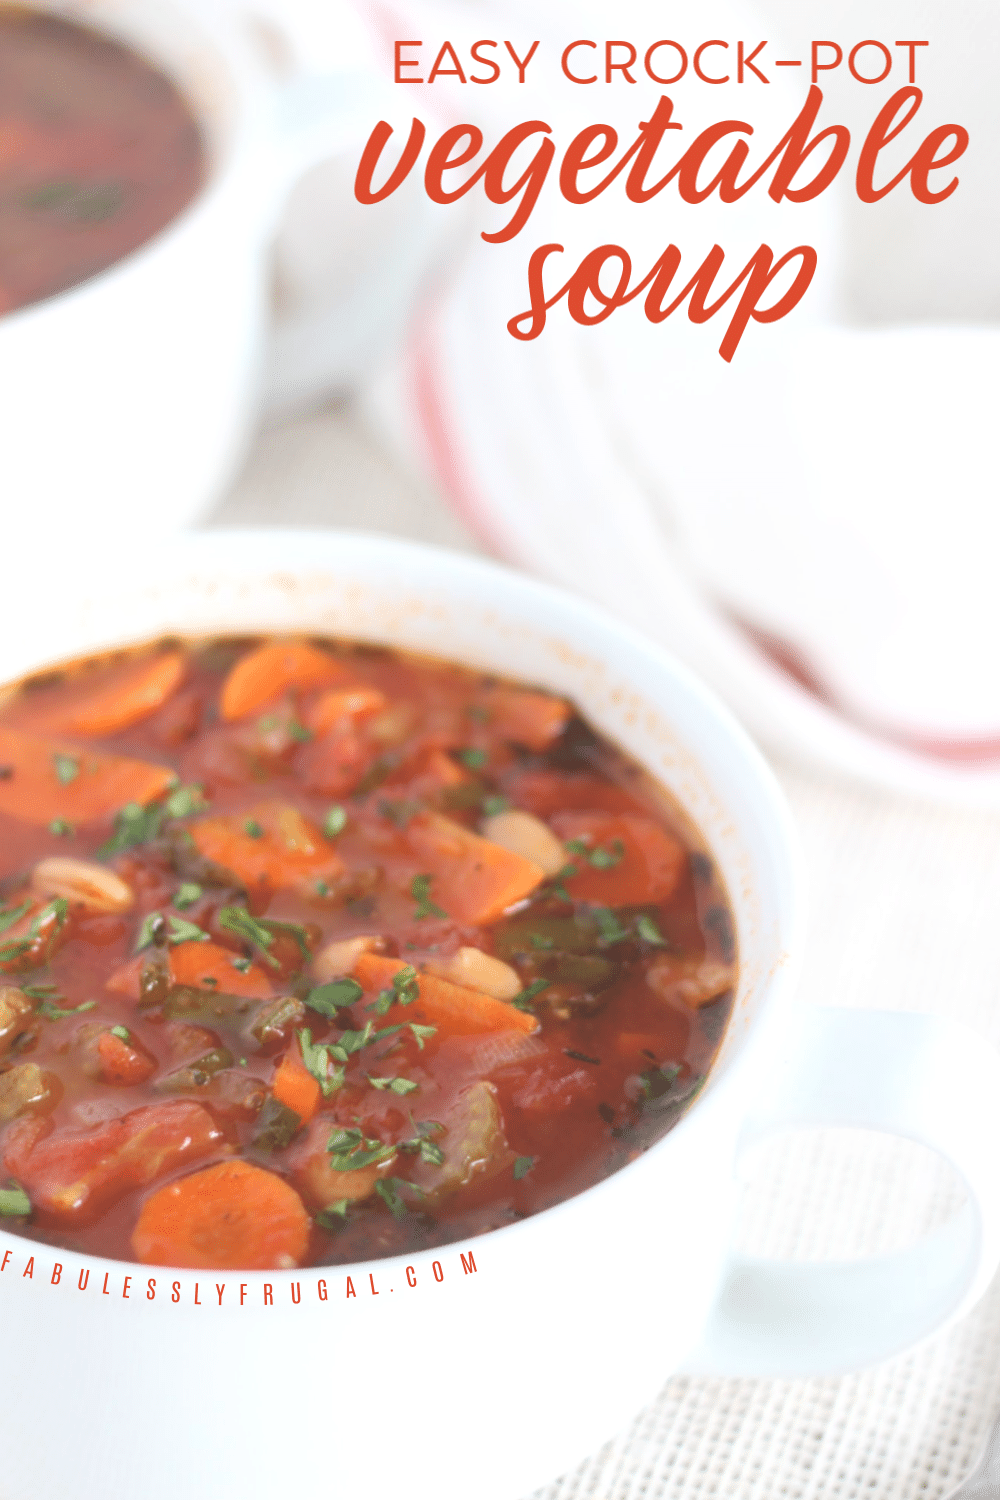 Easy crock pot vegetable soup